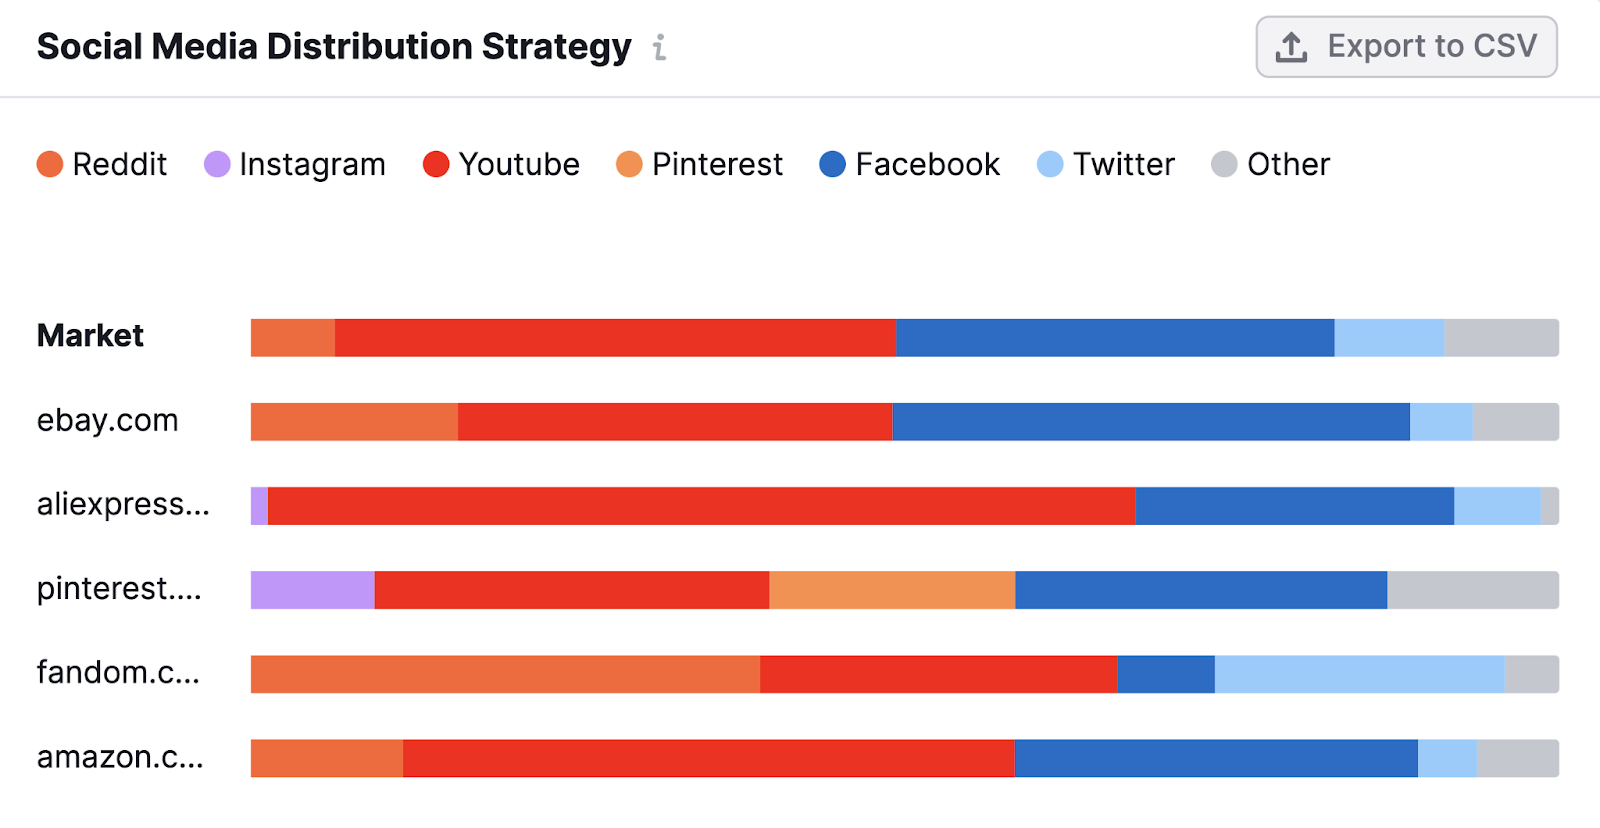 “Social Media Distribution Strategy” graph successful  Market Explorer tool